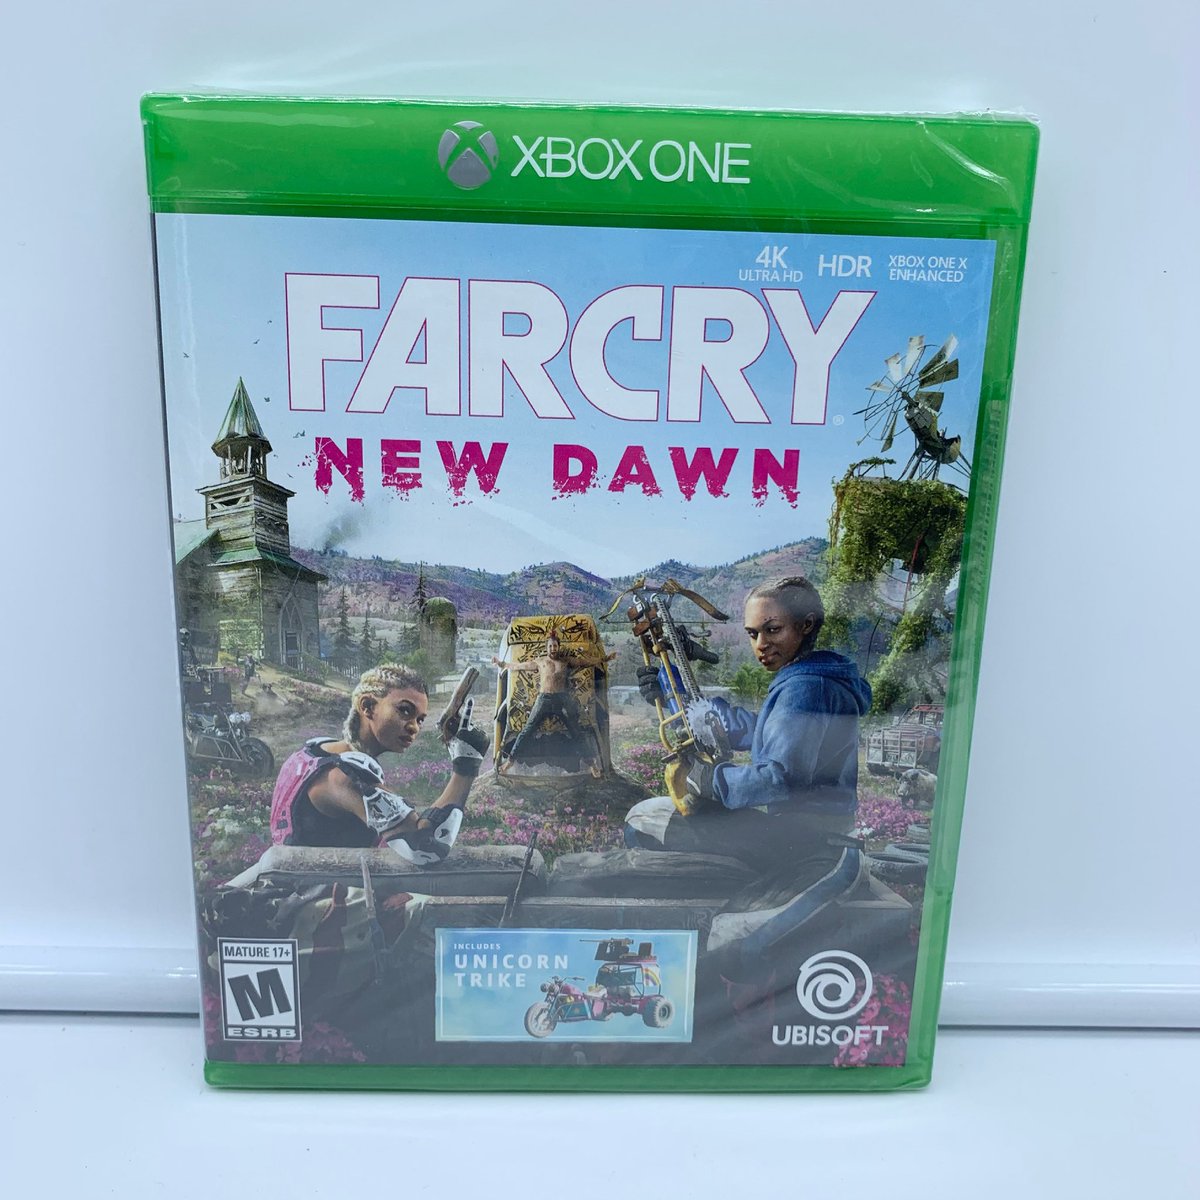 FarCry New Dawn for Xbox One 
unlockedelectronicsstore.com/shop/ols/produ…

#xbox #XboxOne #farcry #farcrynewdawn #gaming #gamers #videogames #xboxonex #games #ebay #reseller #electronicsstore #shop #gamergirls #gamerboy